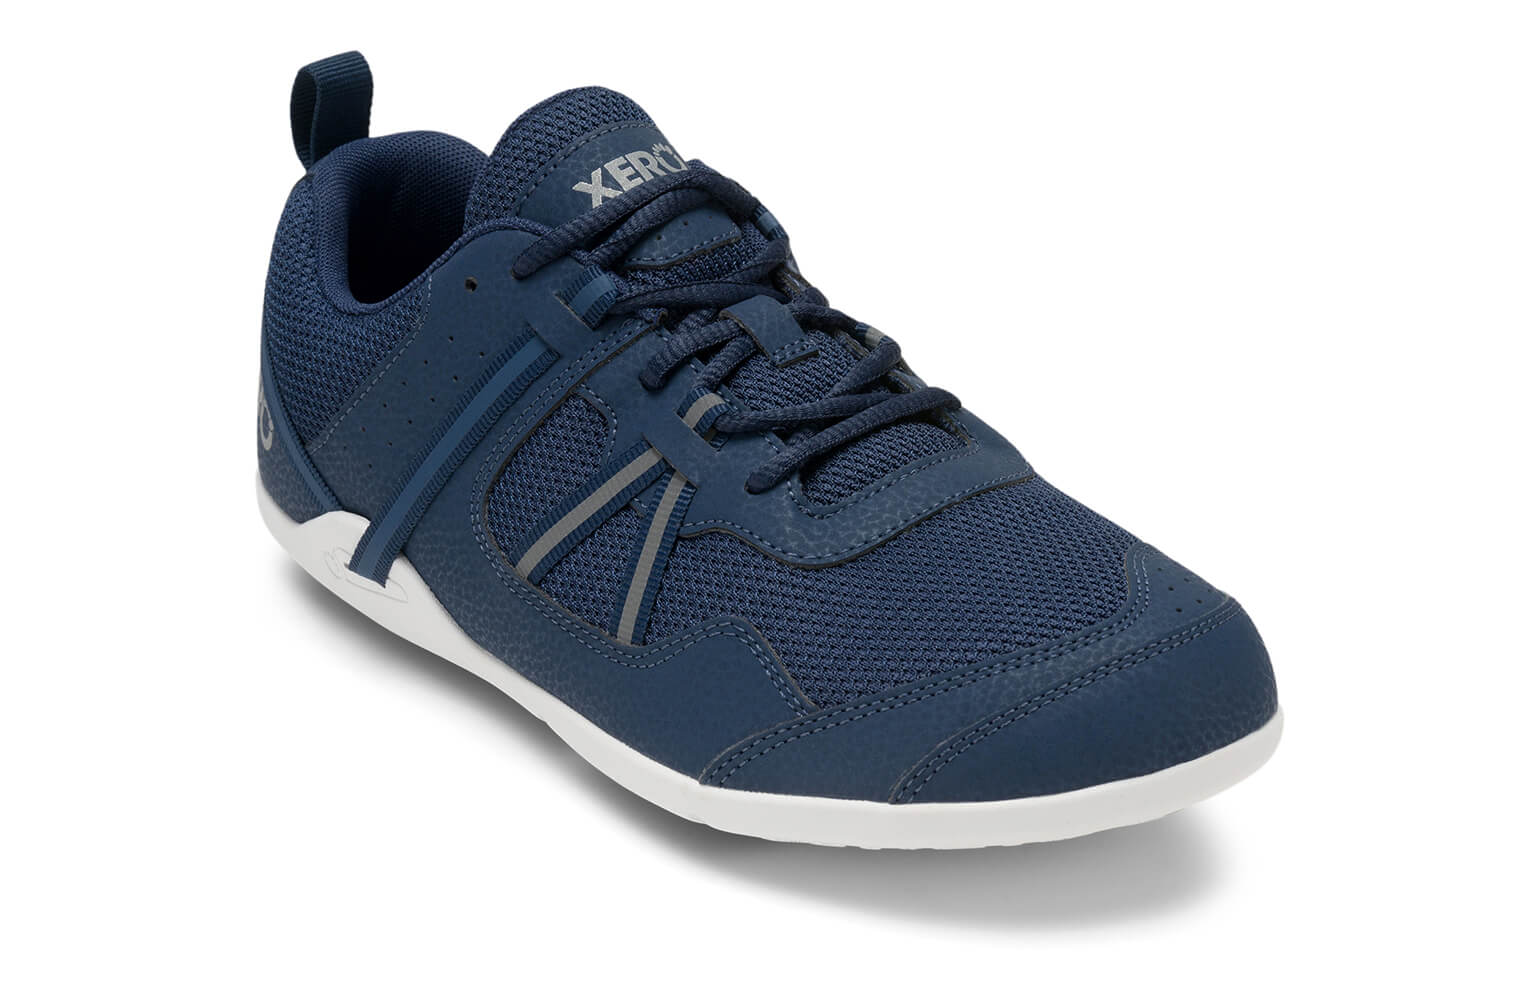 Men's Lightweight Minimalist Running Fitness Shoe in Suede - Xero Shoes